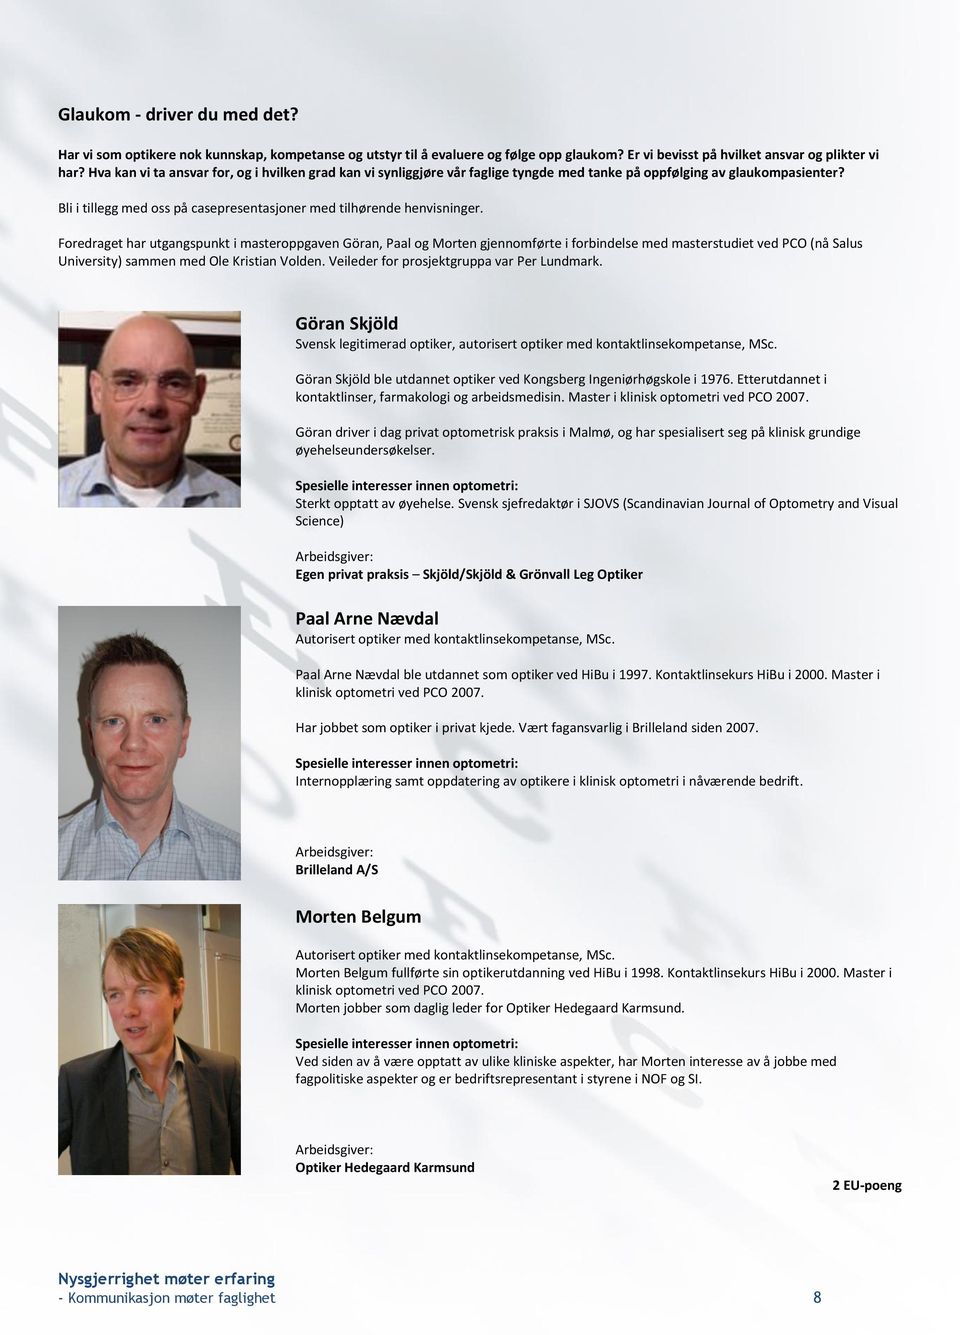 Foredraget har utgangspunkt i masteroppgaven Göran, Paal og Morten gjennomførte i forbindelse med masterstudiet ved PCO (nå Salus University) sammen med Ole Kristian Volden.